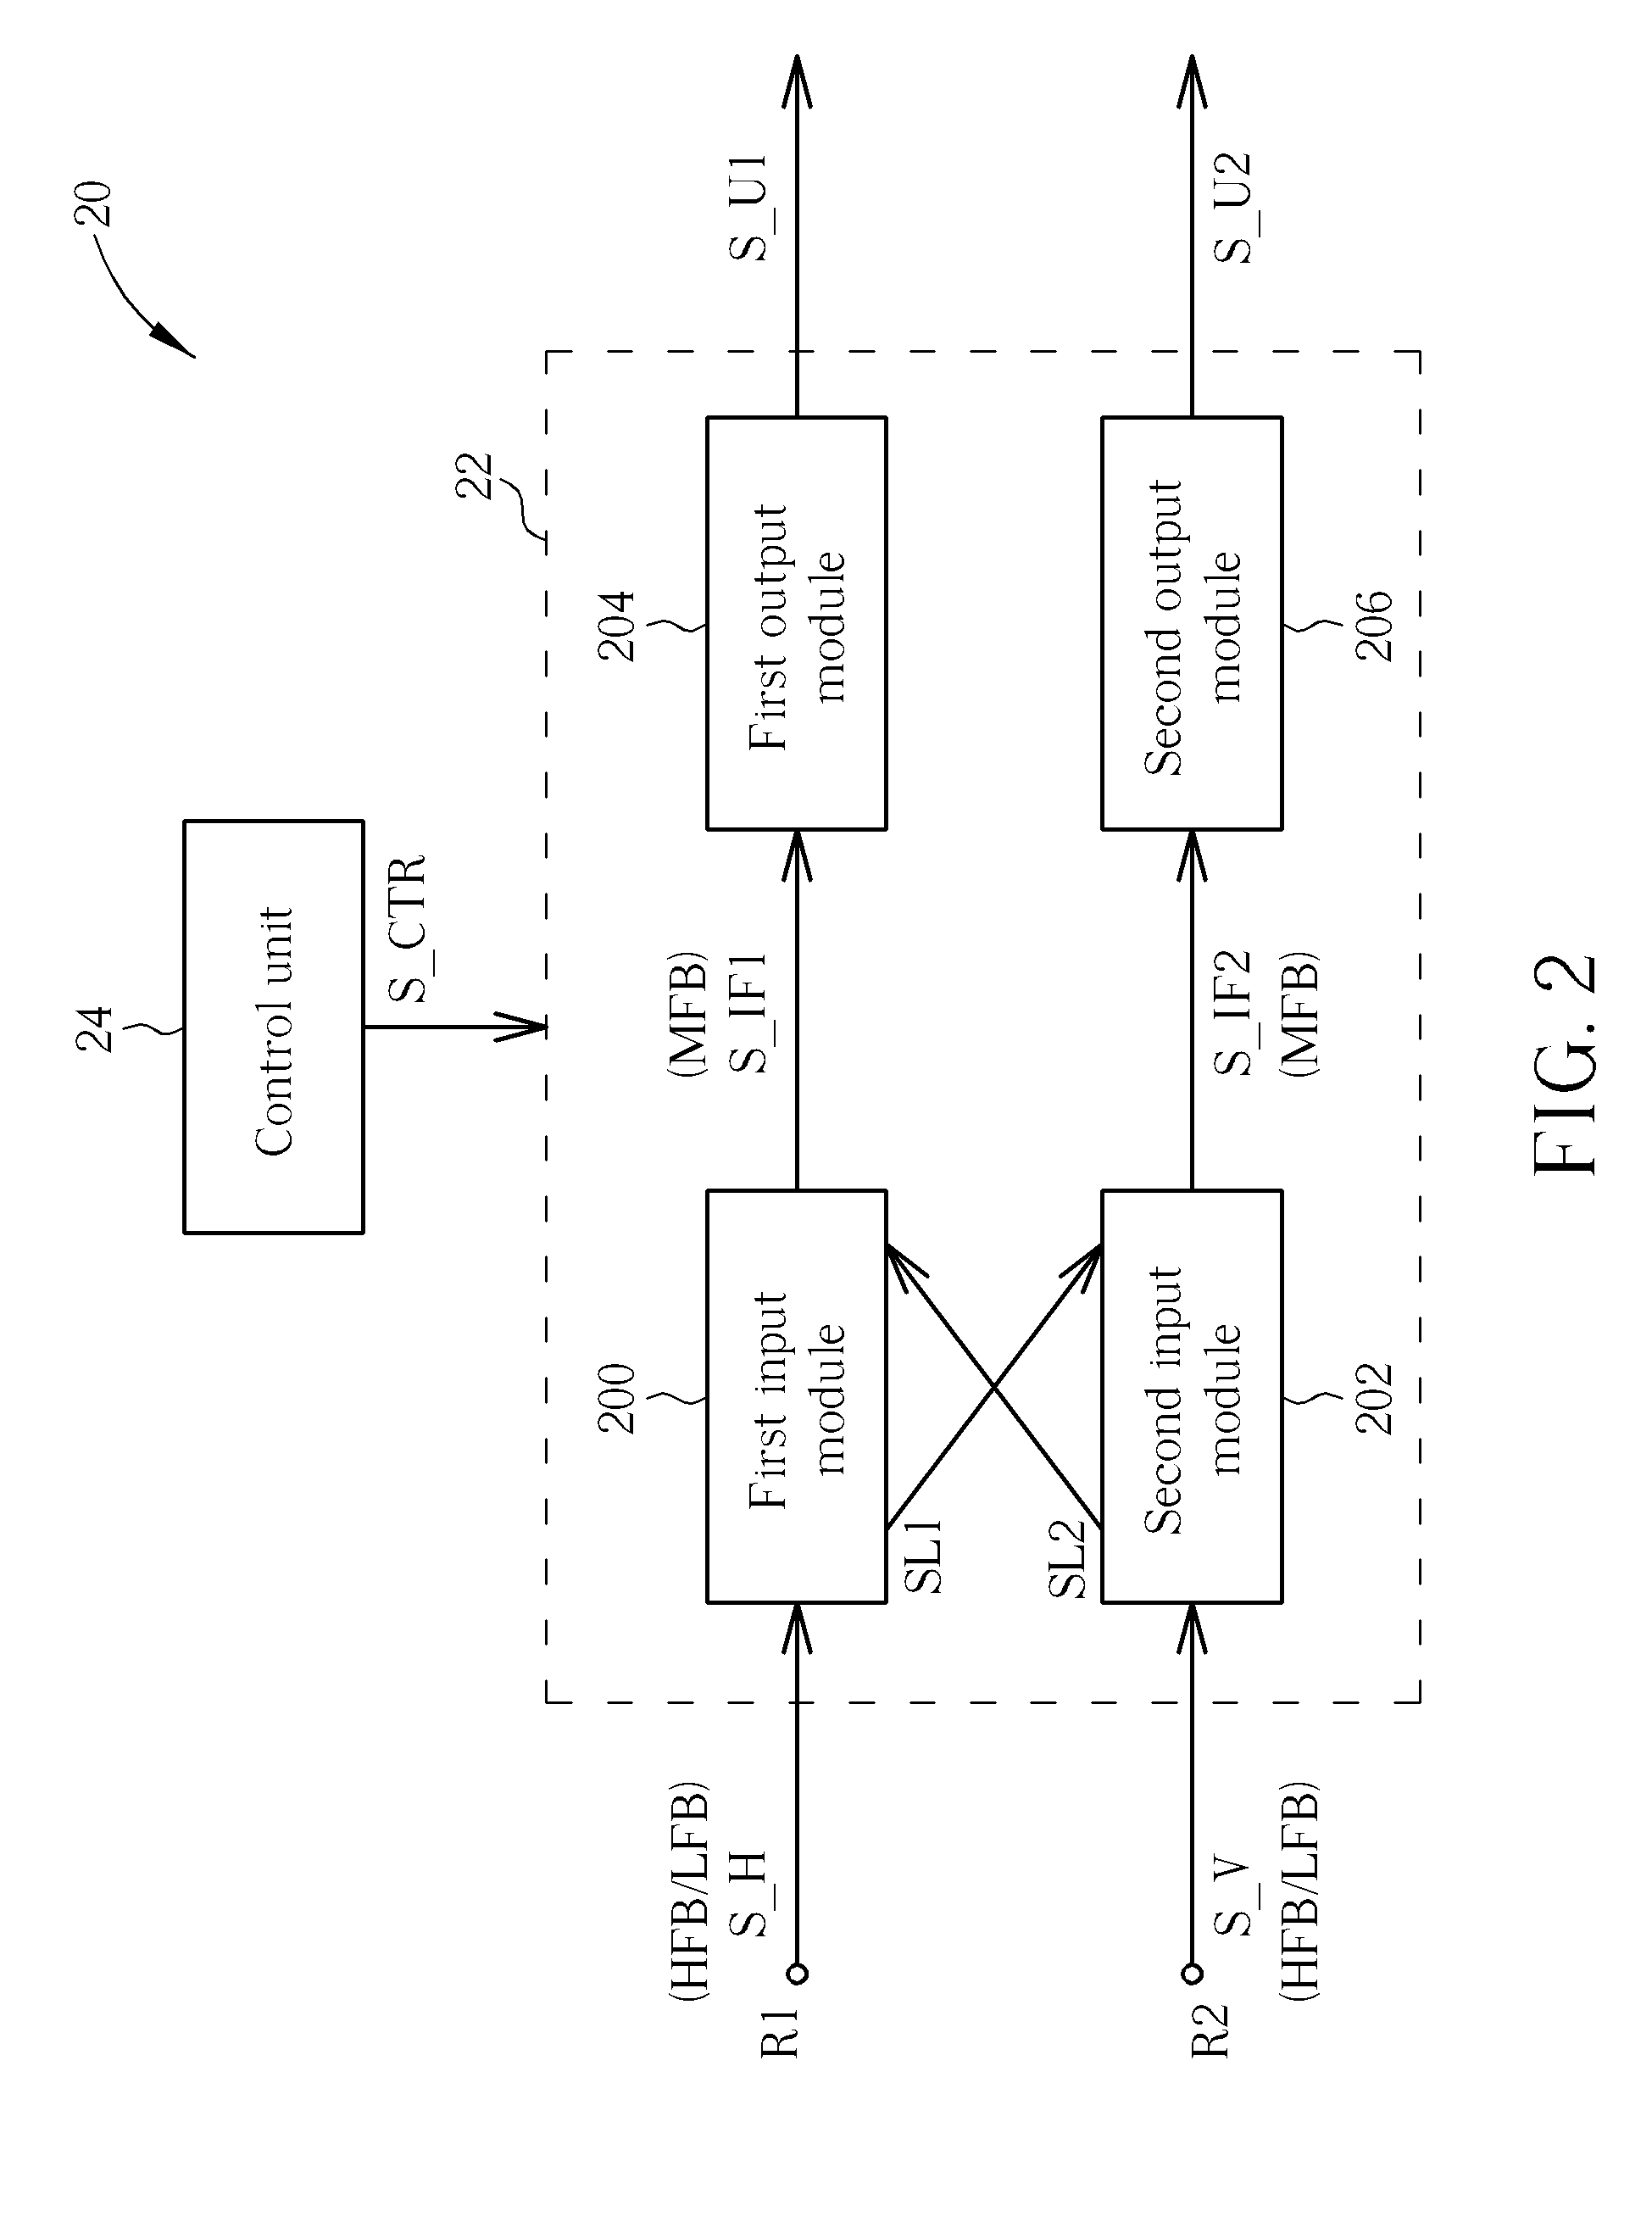 Multiple-Input Multiple-Output Low-Noise Block Downconverter and Low-Noise Module